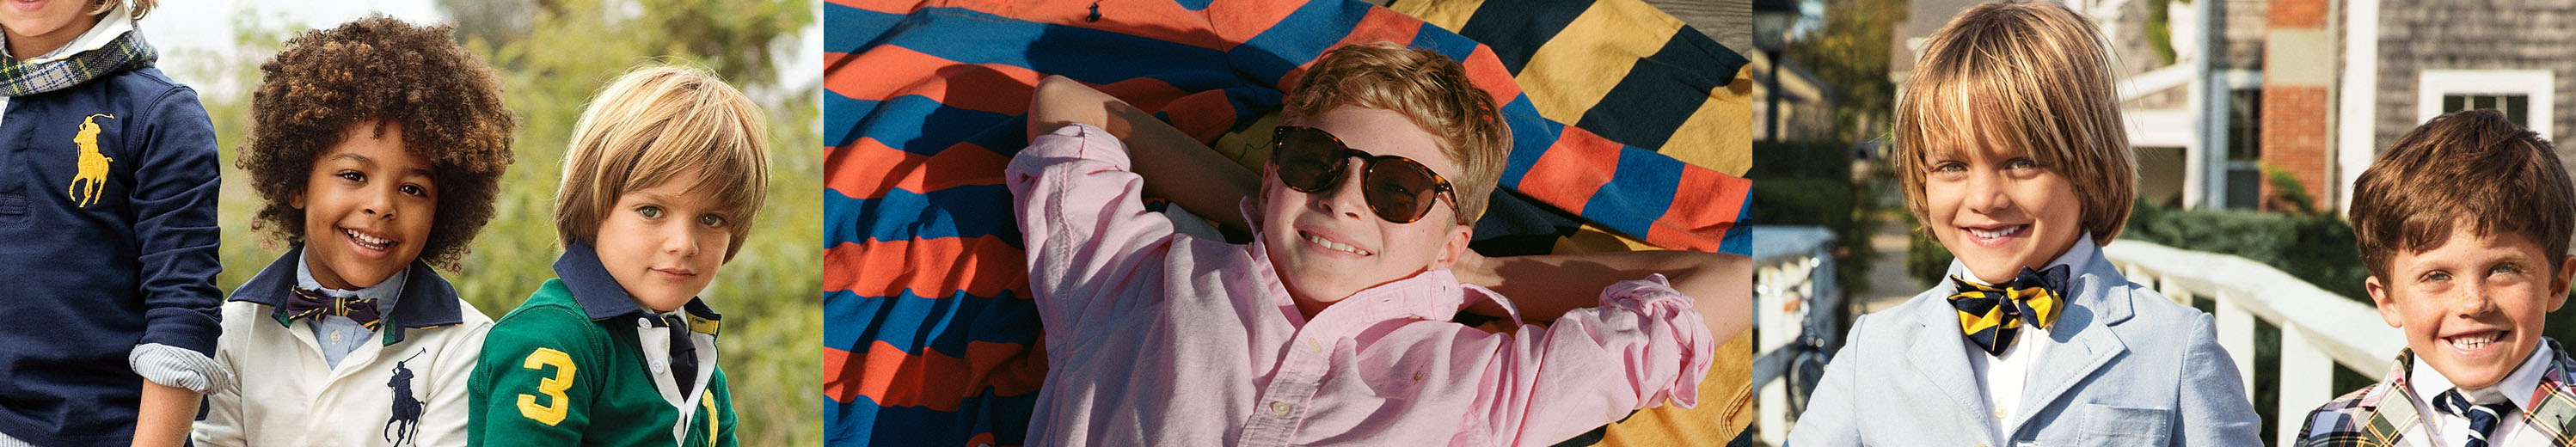 Polo Sunglasses for Kids